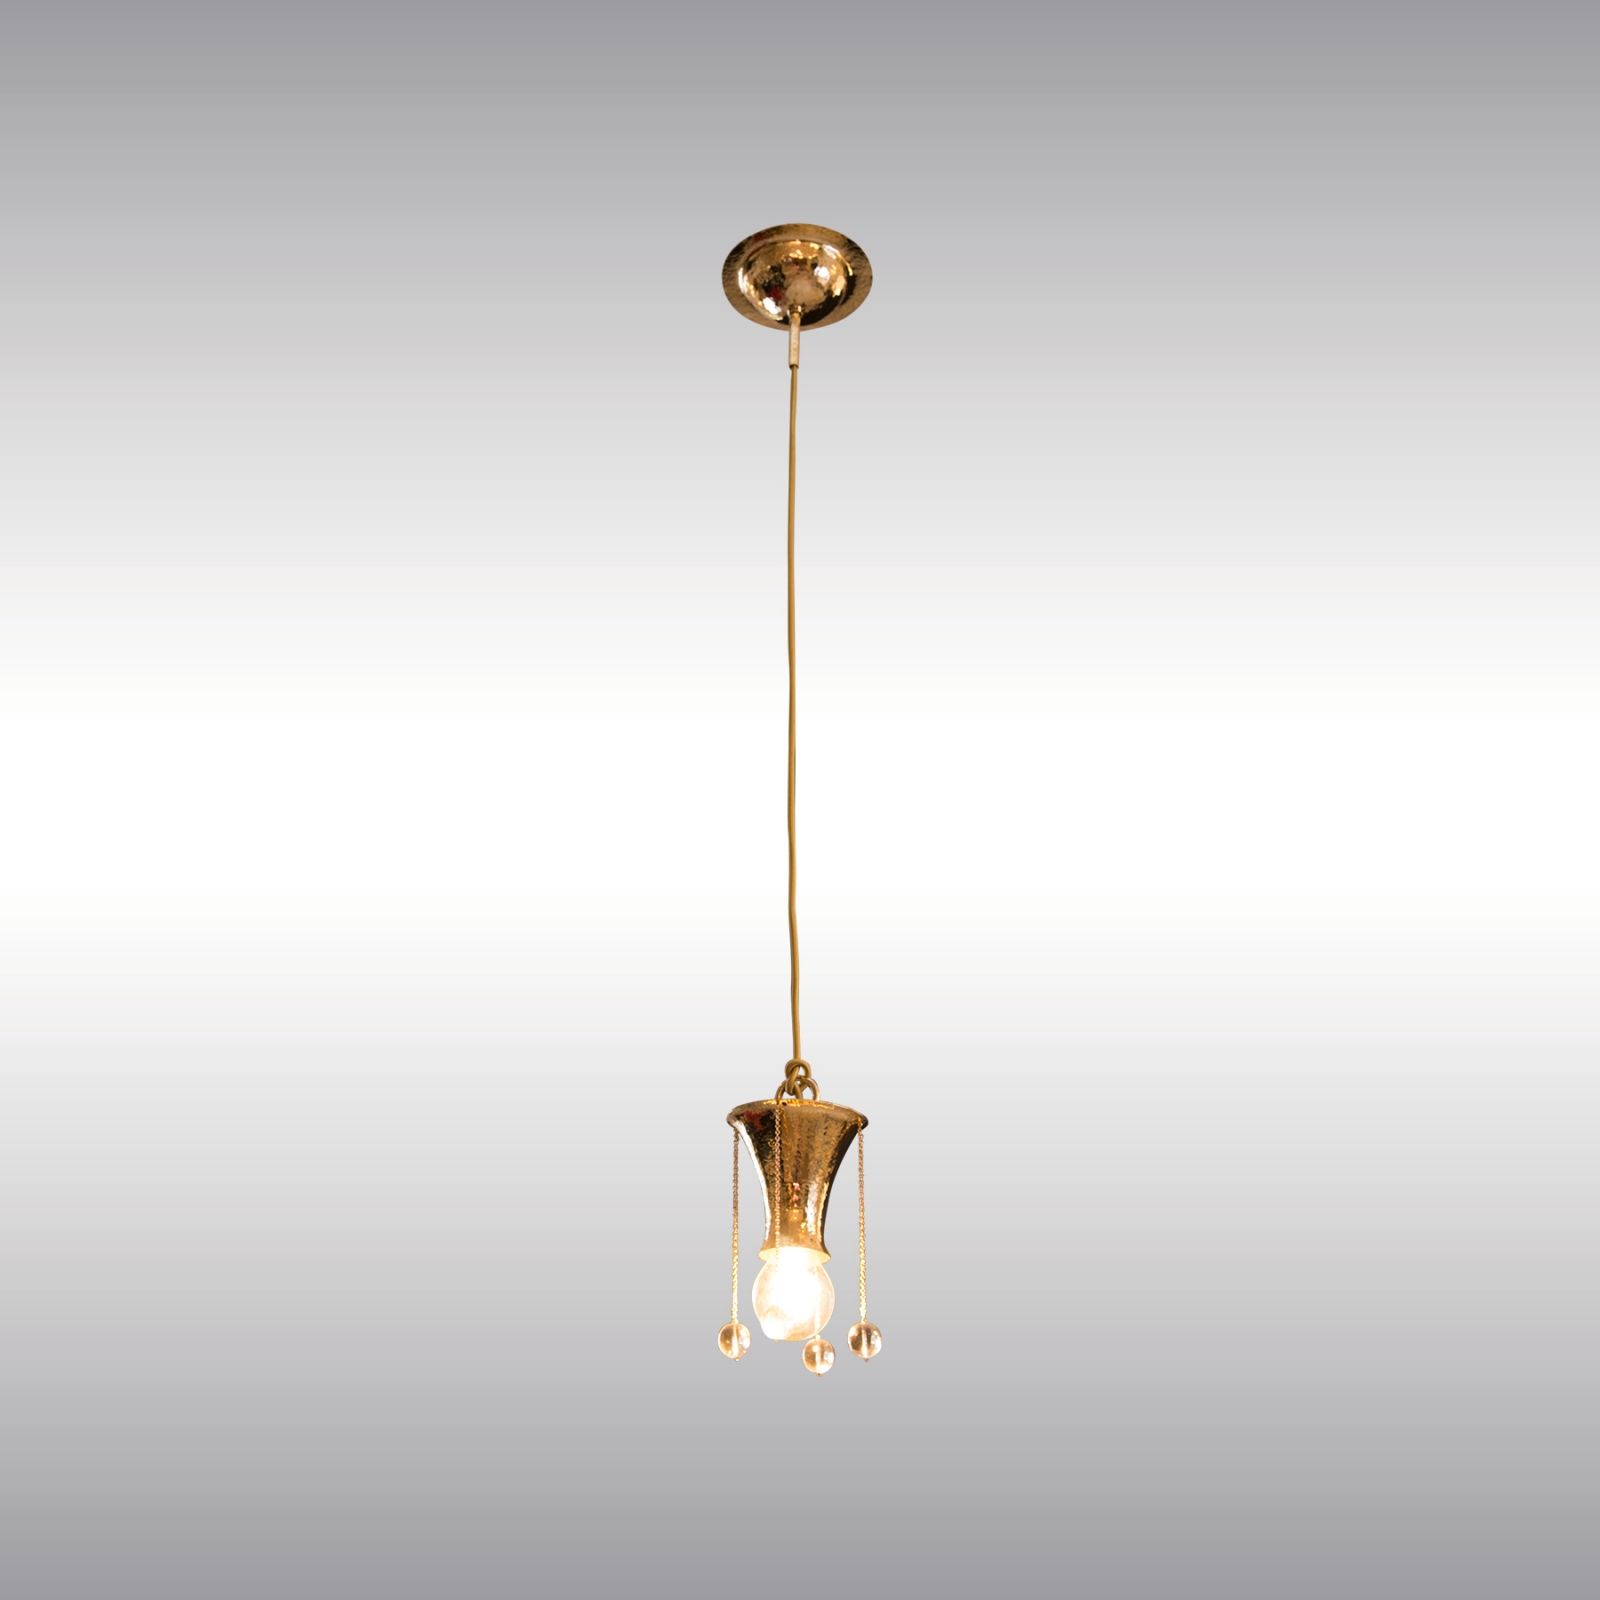 WOKA LAMPS VIENNA - OrderNr.: 22104|WW-Pende-hammered - Design: Josef Hoffmann